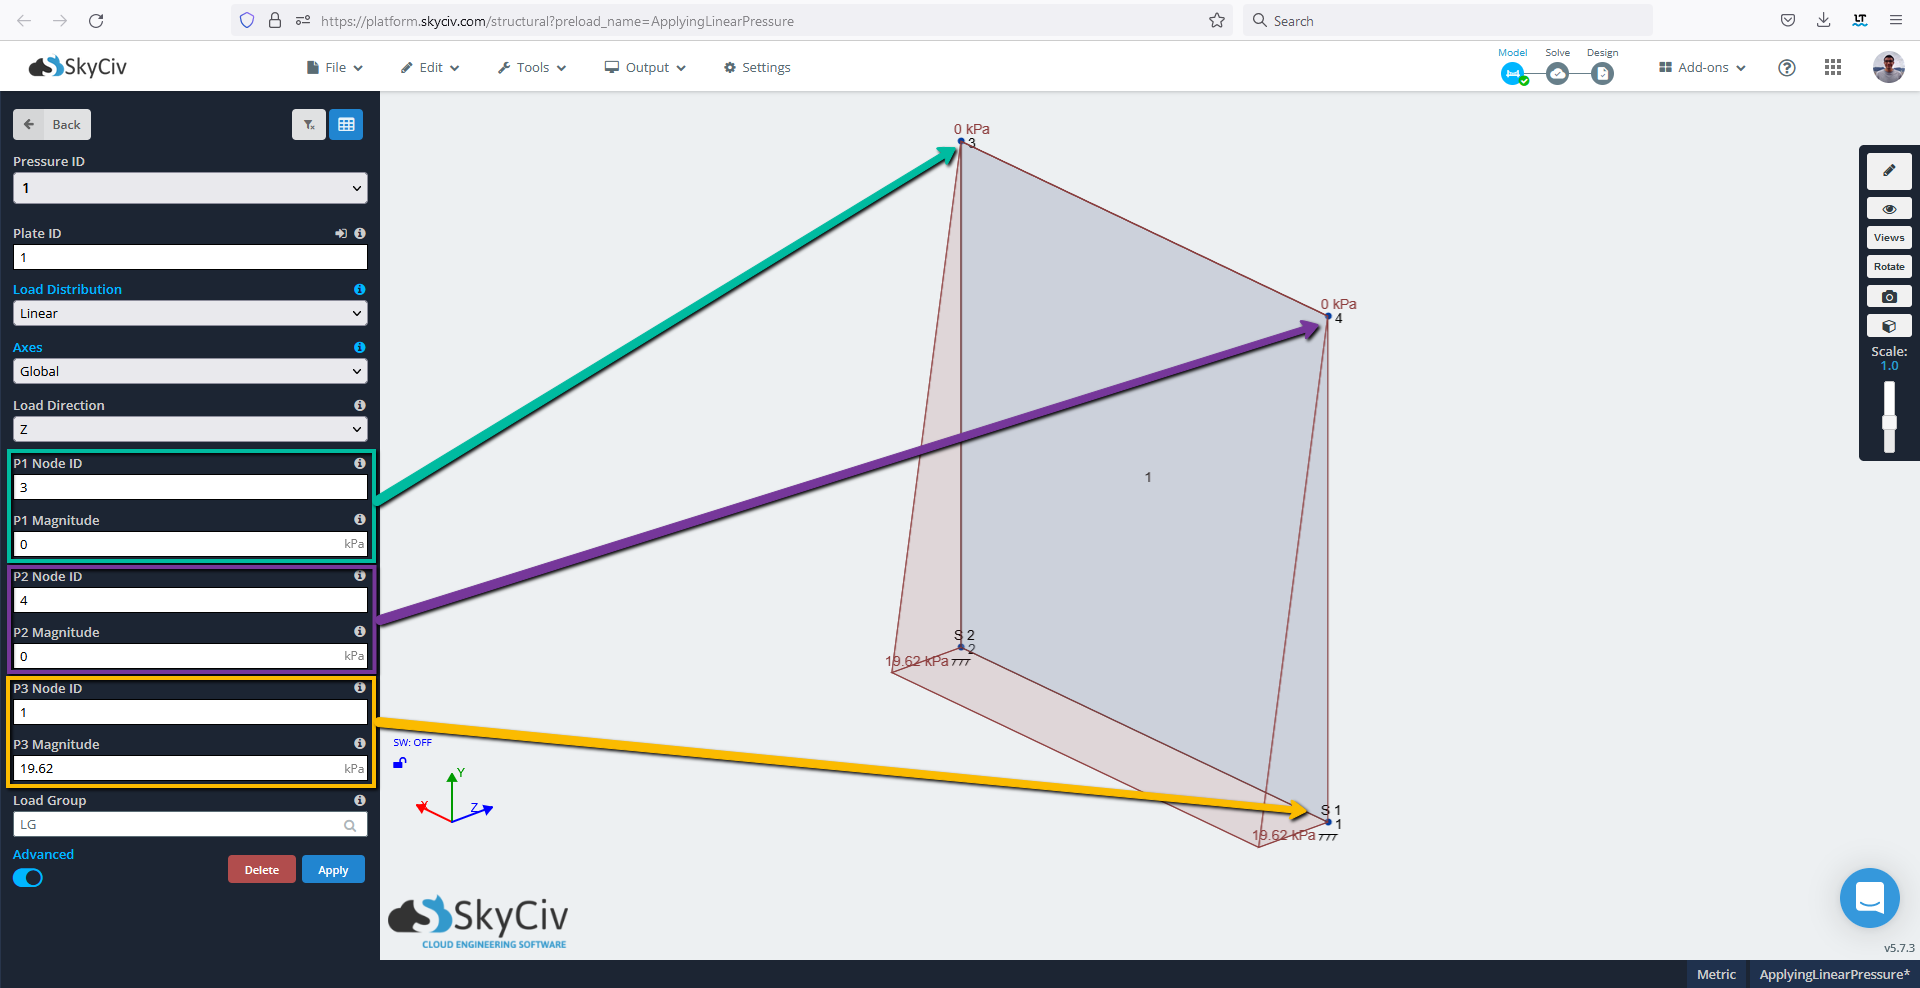 SkyCiv S3D showing how to apply linear or variable pressure - Nós com setas